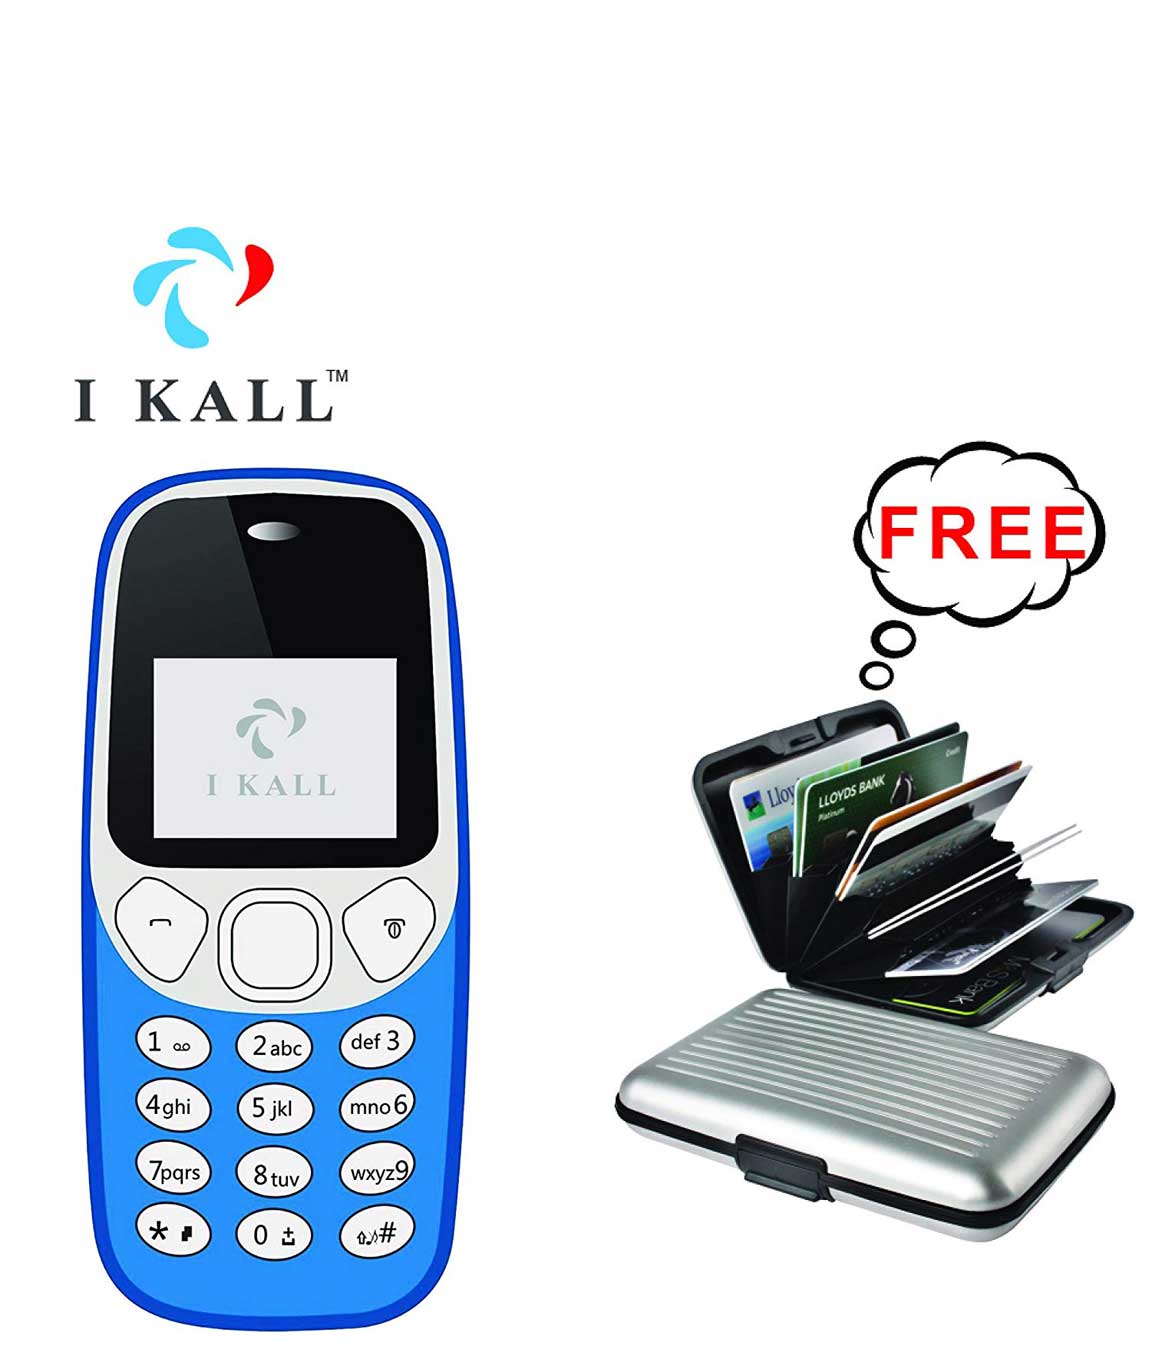 IKALL K71 Mobile And Get Aluminium Wallet (Light Blue)